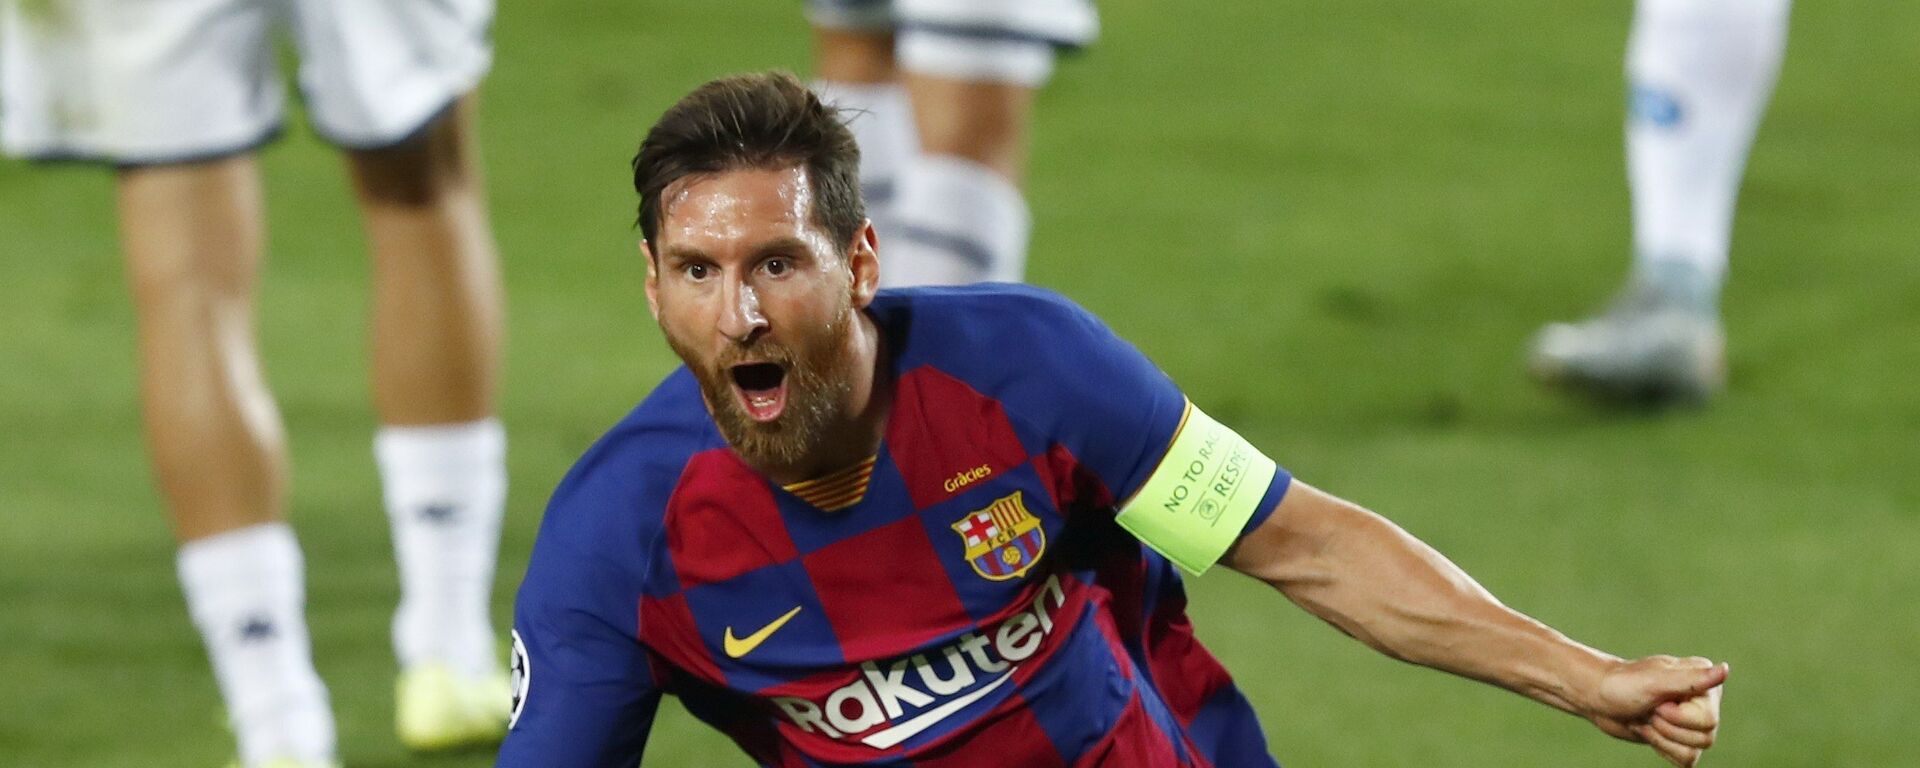 Leo Messi, futbolista argentino - Sputnik Mundo, 1920, 31.01.2021